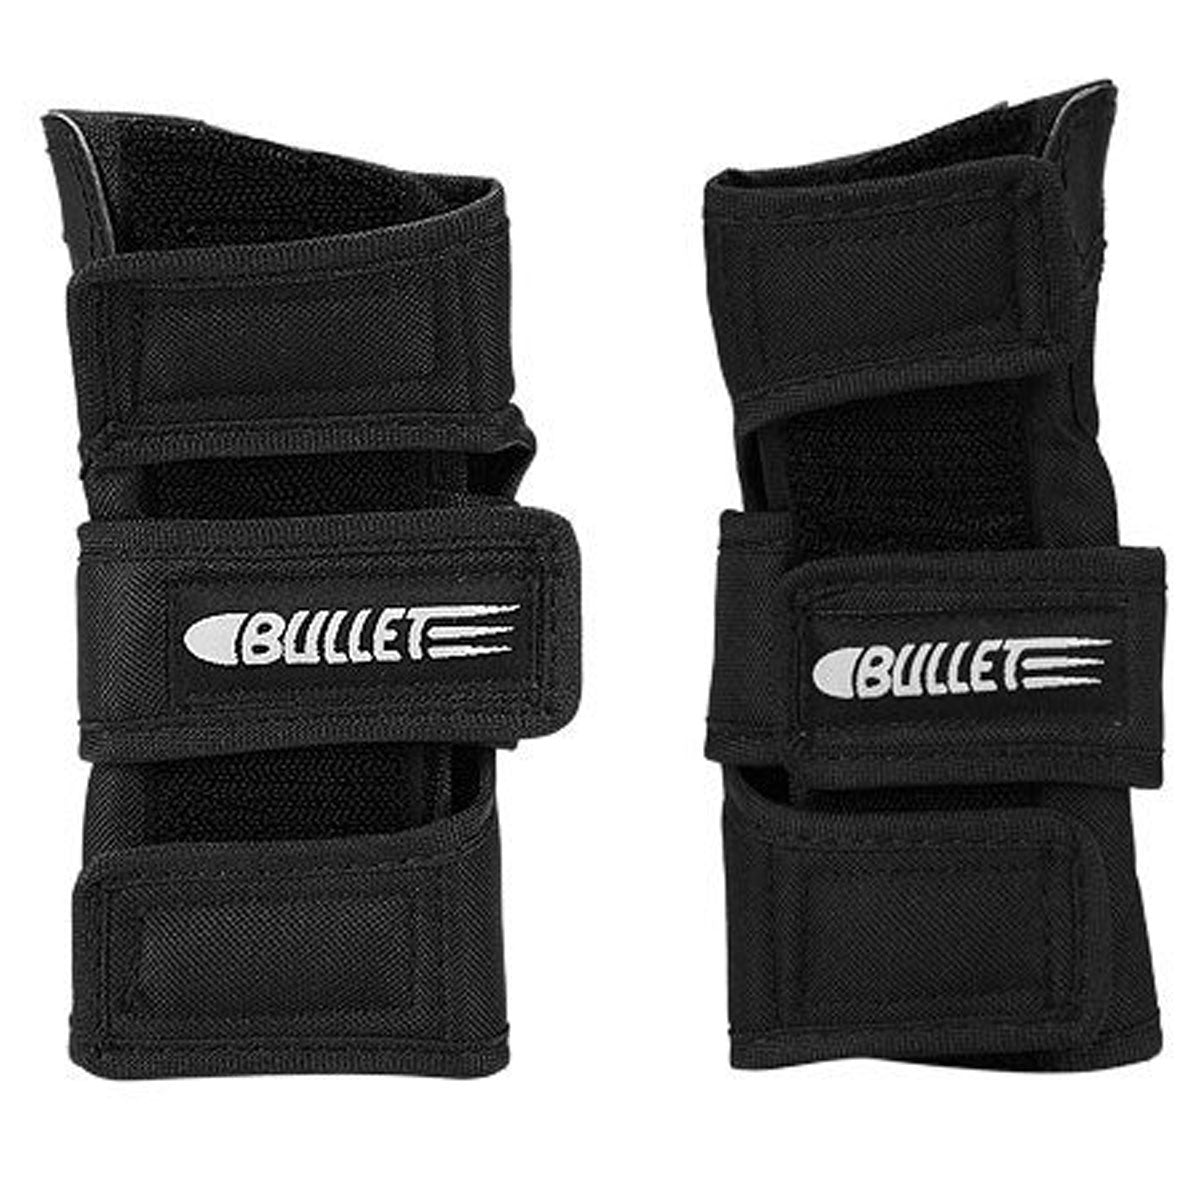 Bullet Wrist Guard Pads - Black image 1